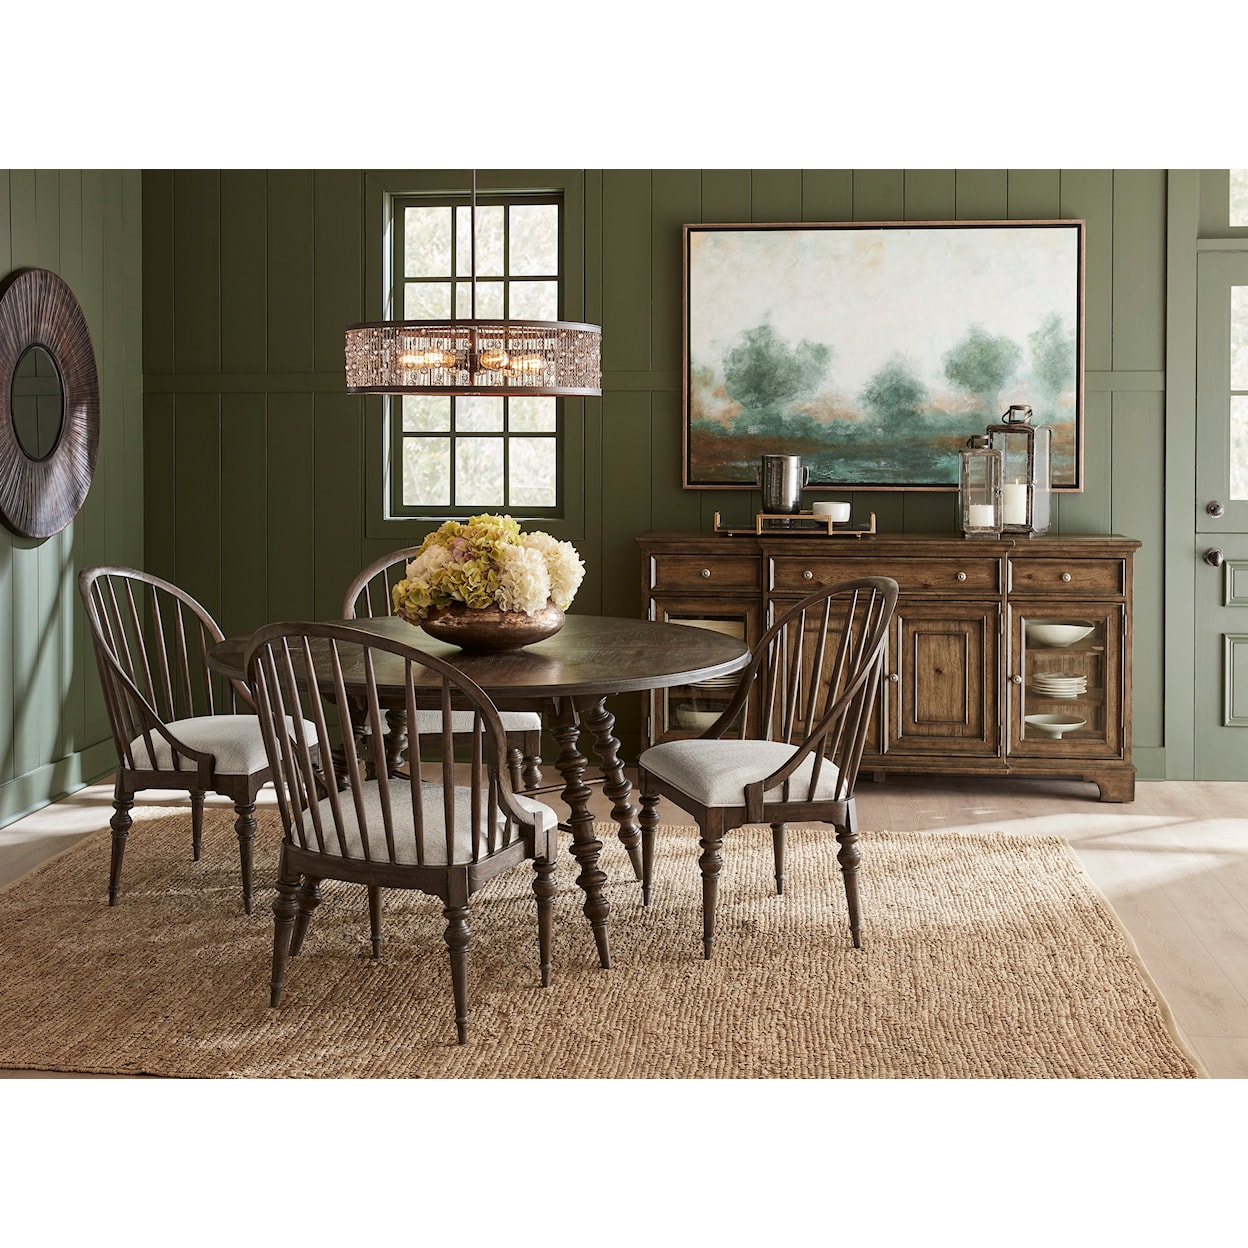 Pulaski Furniture Revival Row 3-Drawer Buffet